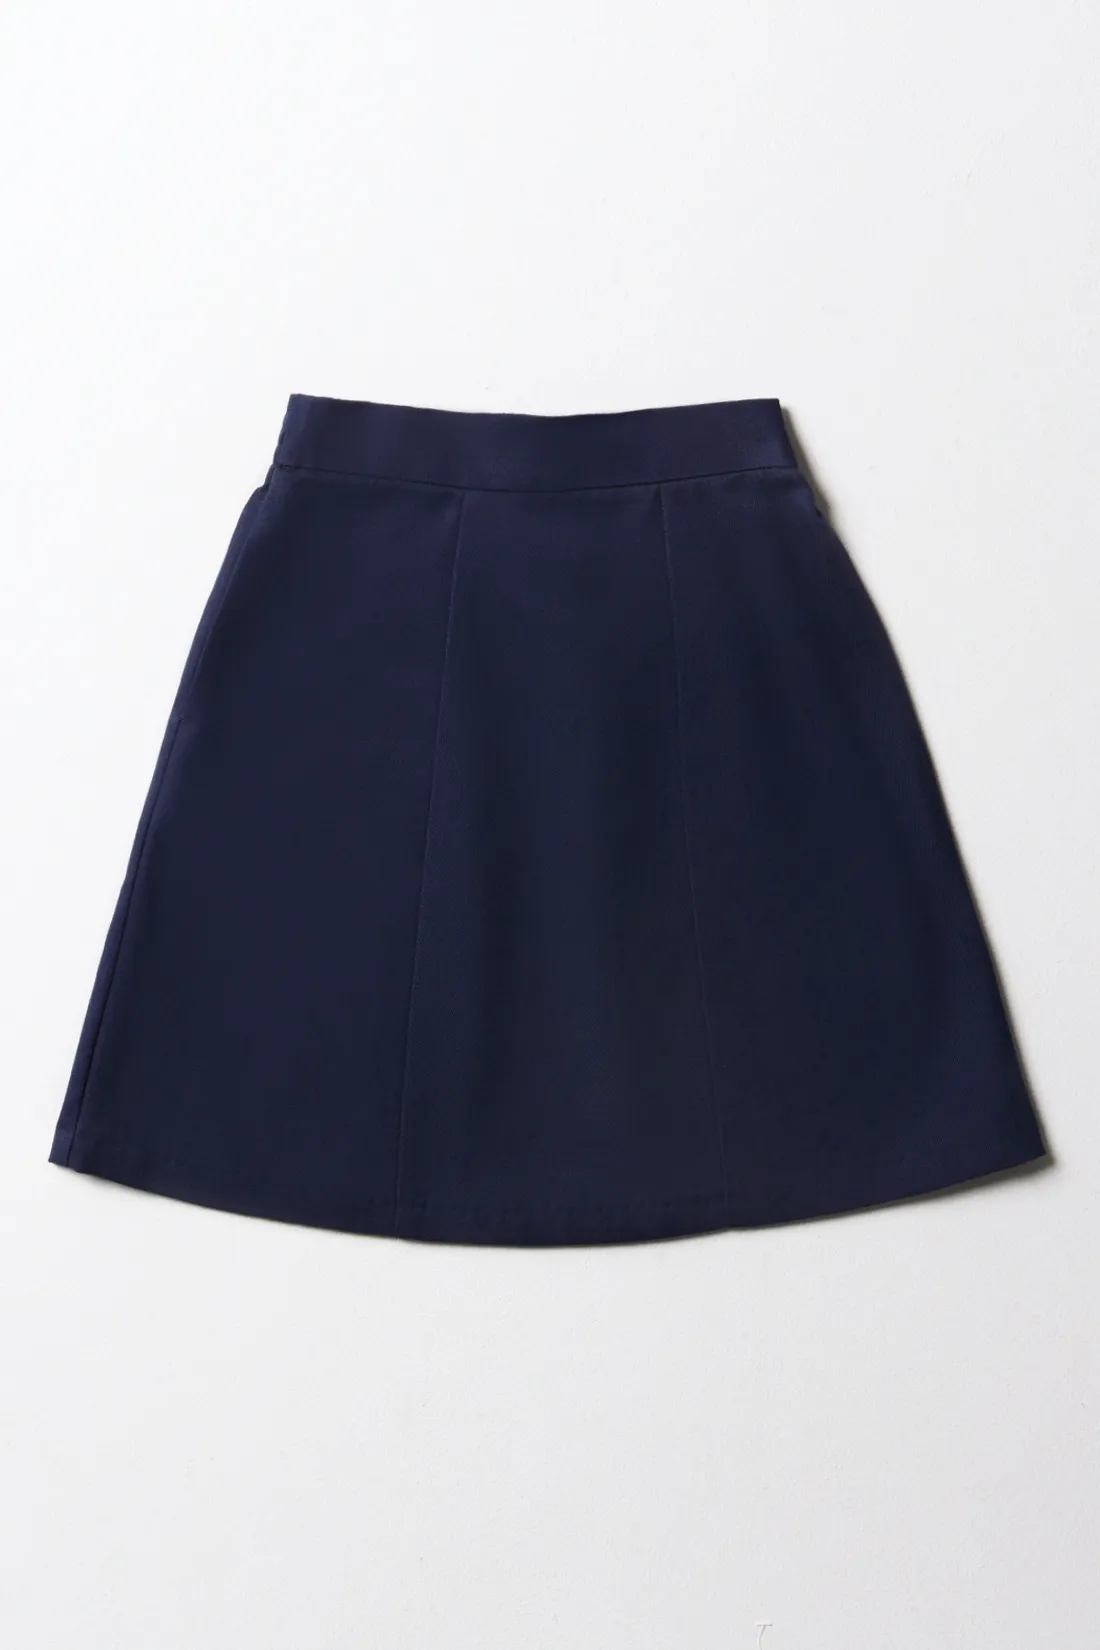 Girls skirt navy - Kids's School Clothes | Ackermans